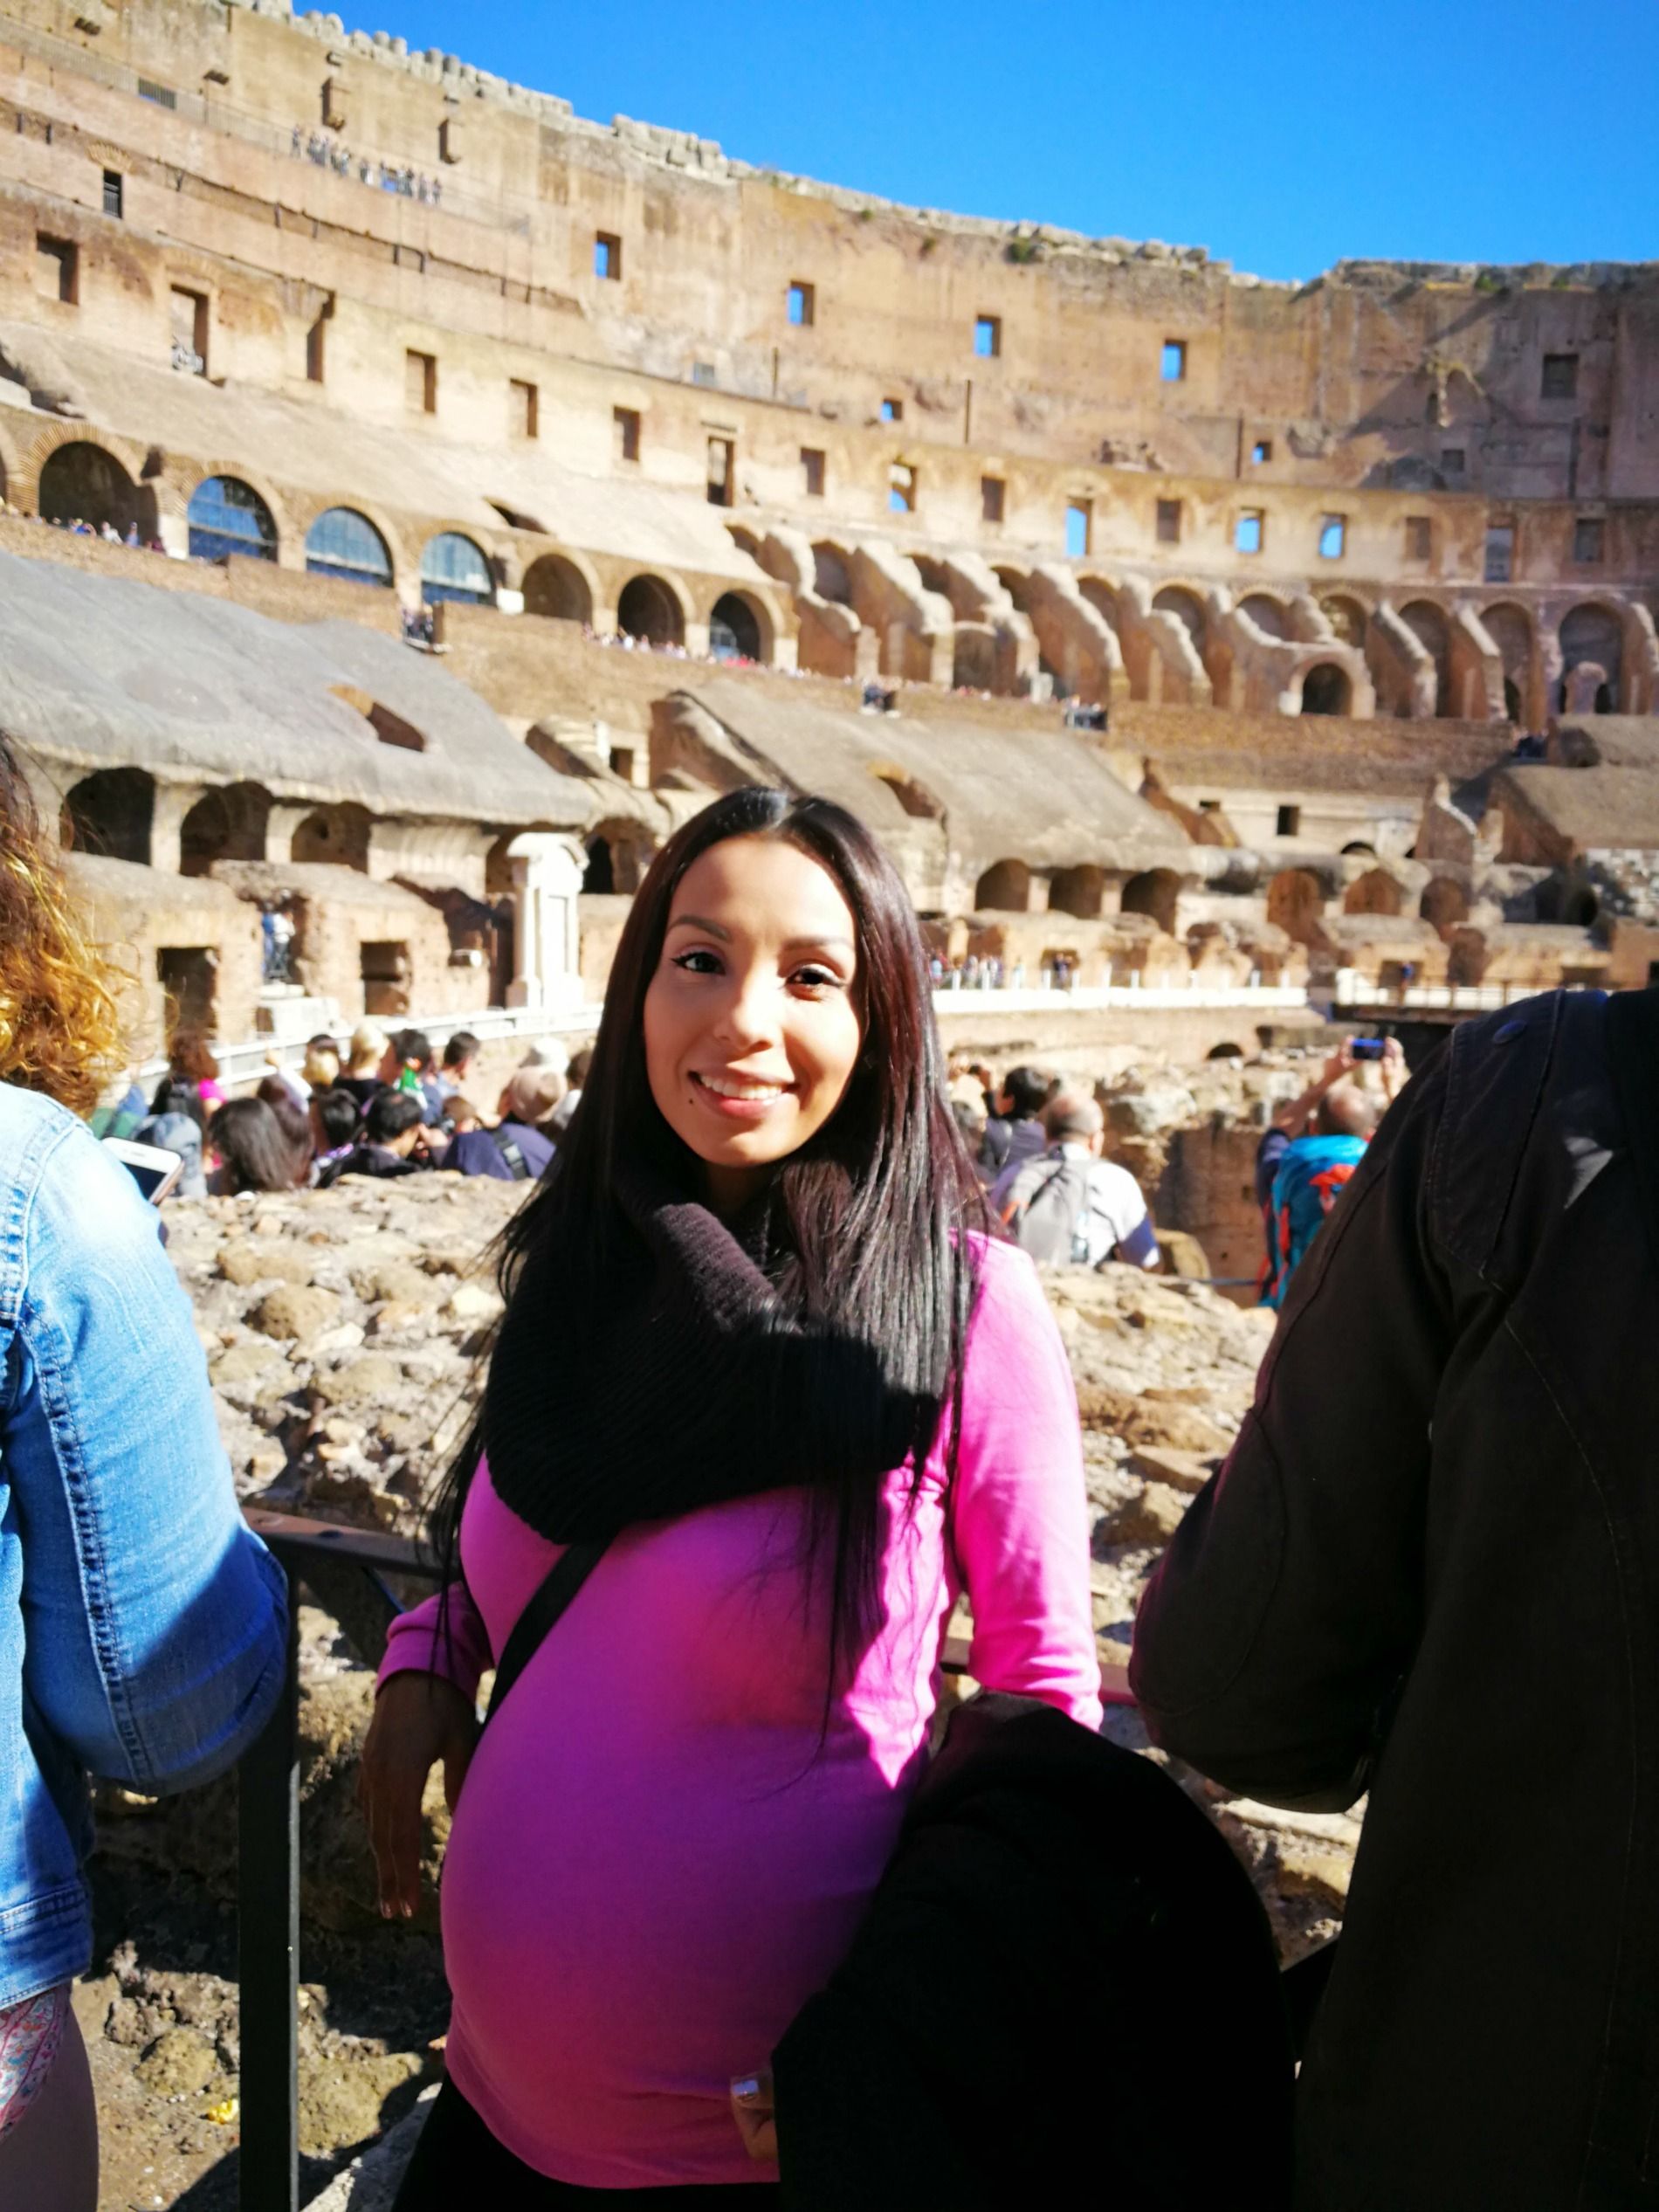 Coliseo-Roma-travel-anabell-hilarski.jpg